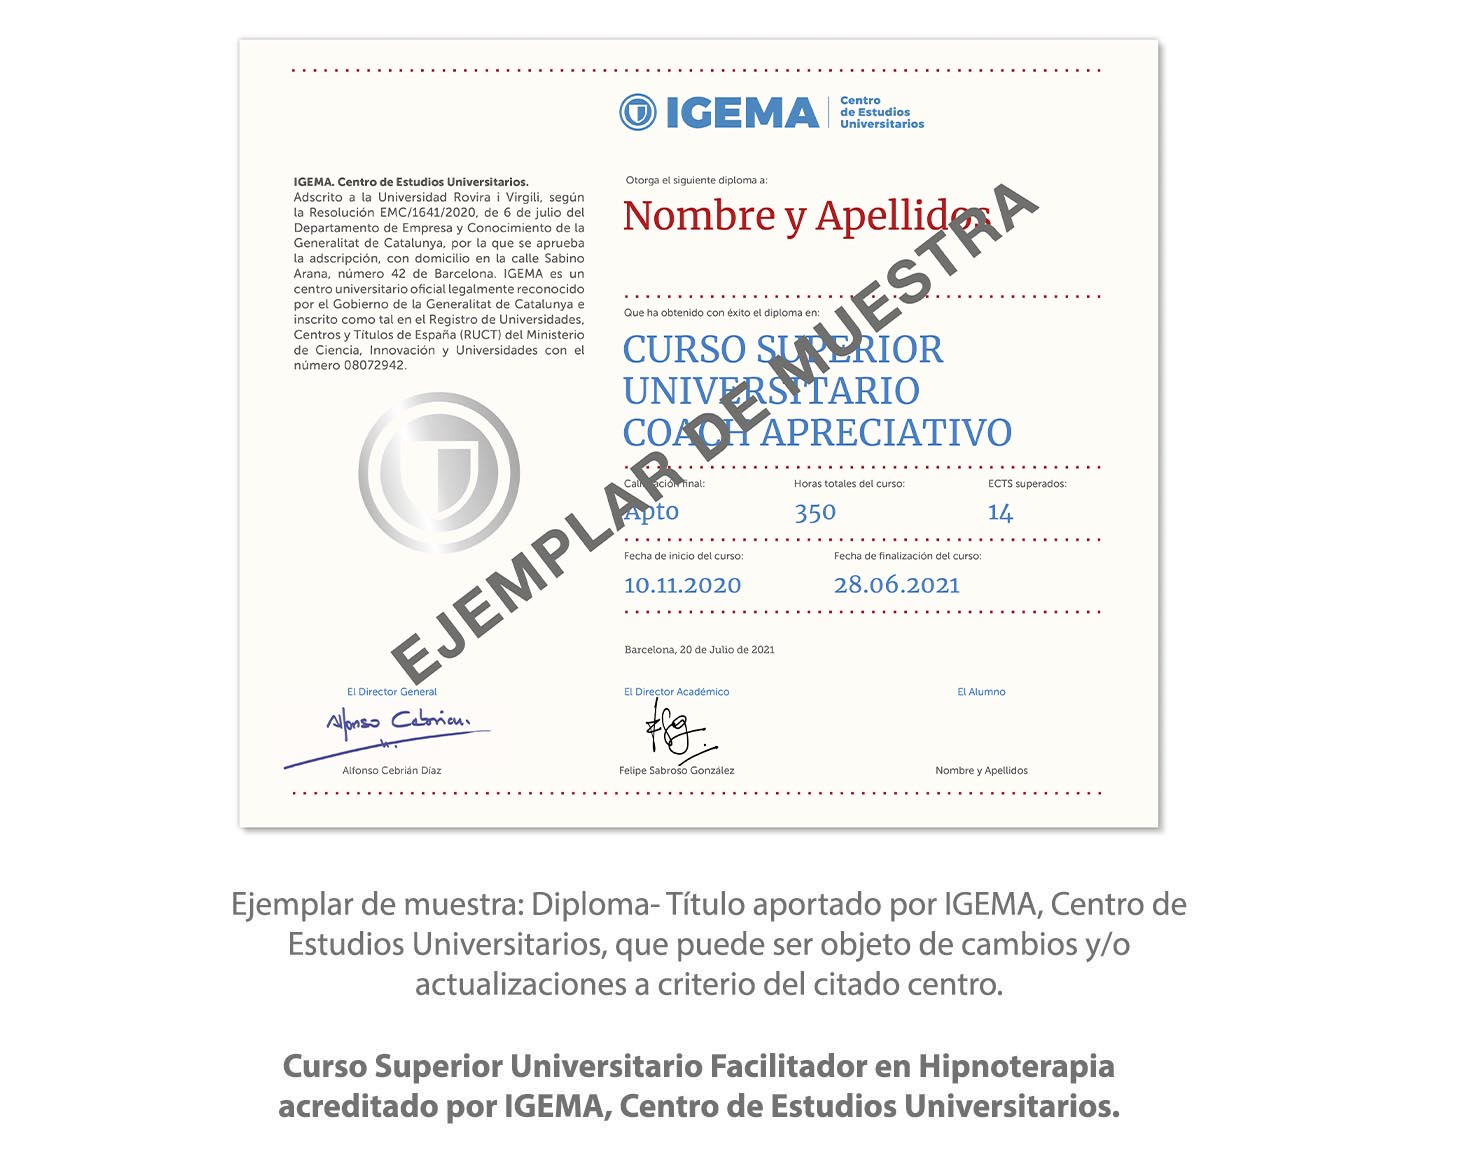 Curso Superior Universitario Facilitador en Hipnoterapia IGEMA